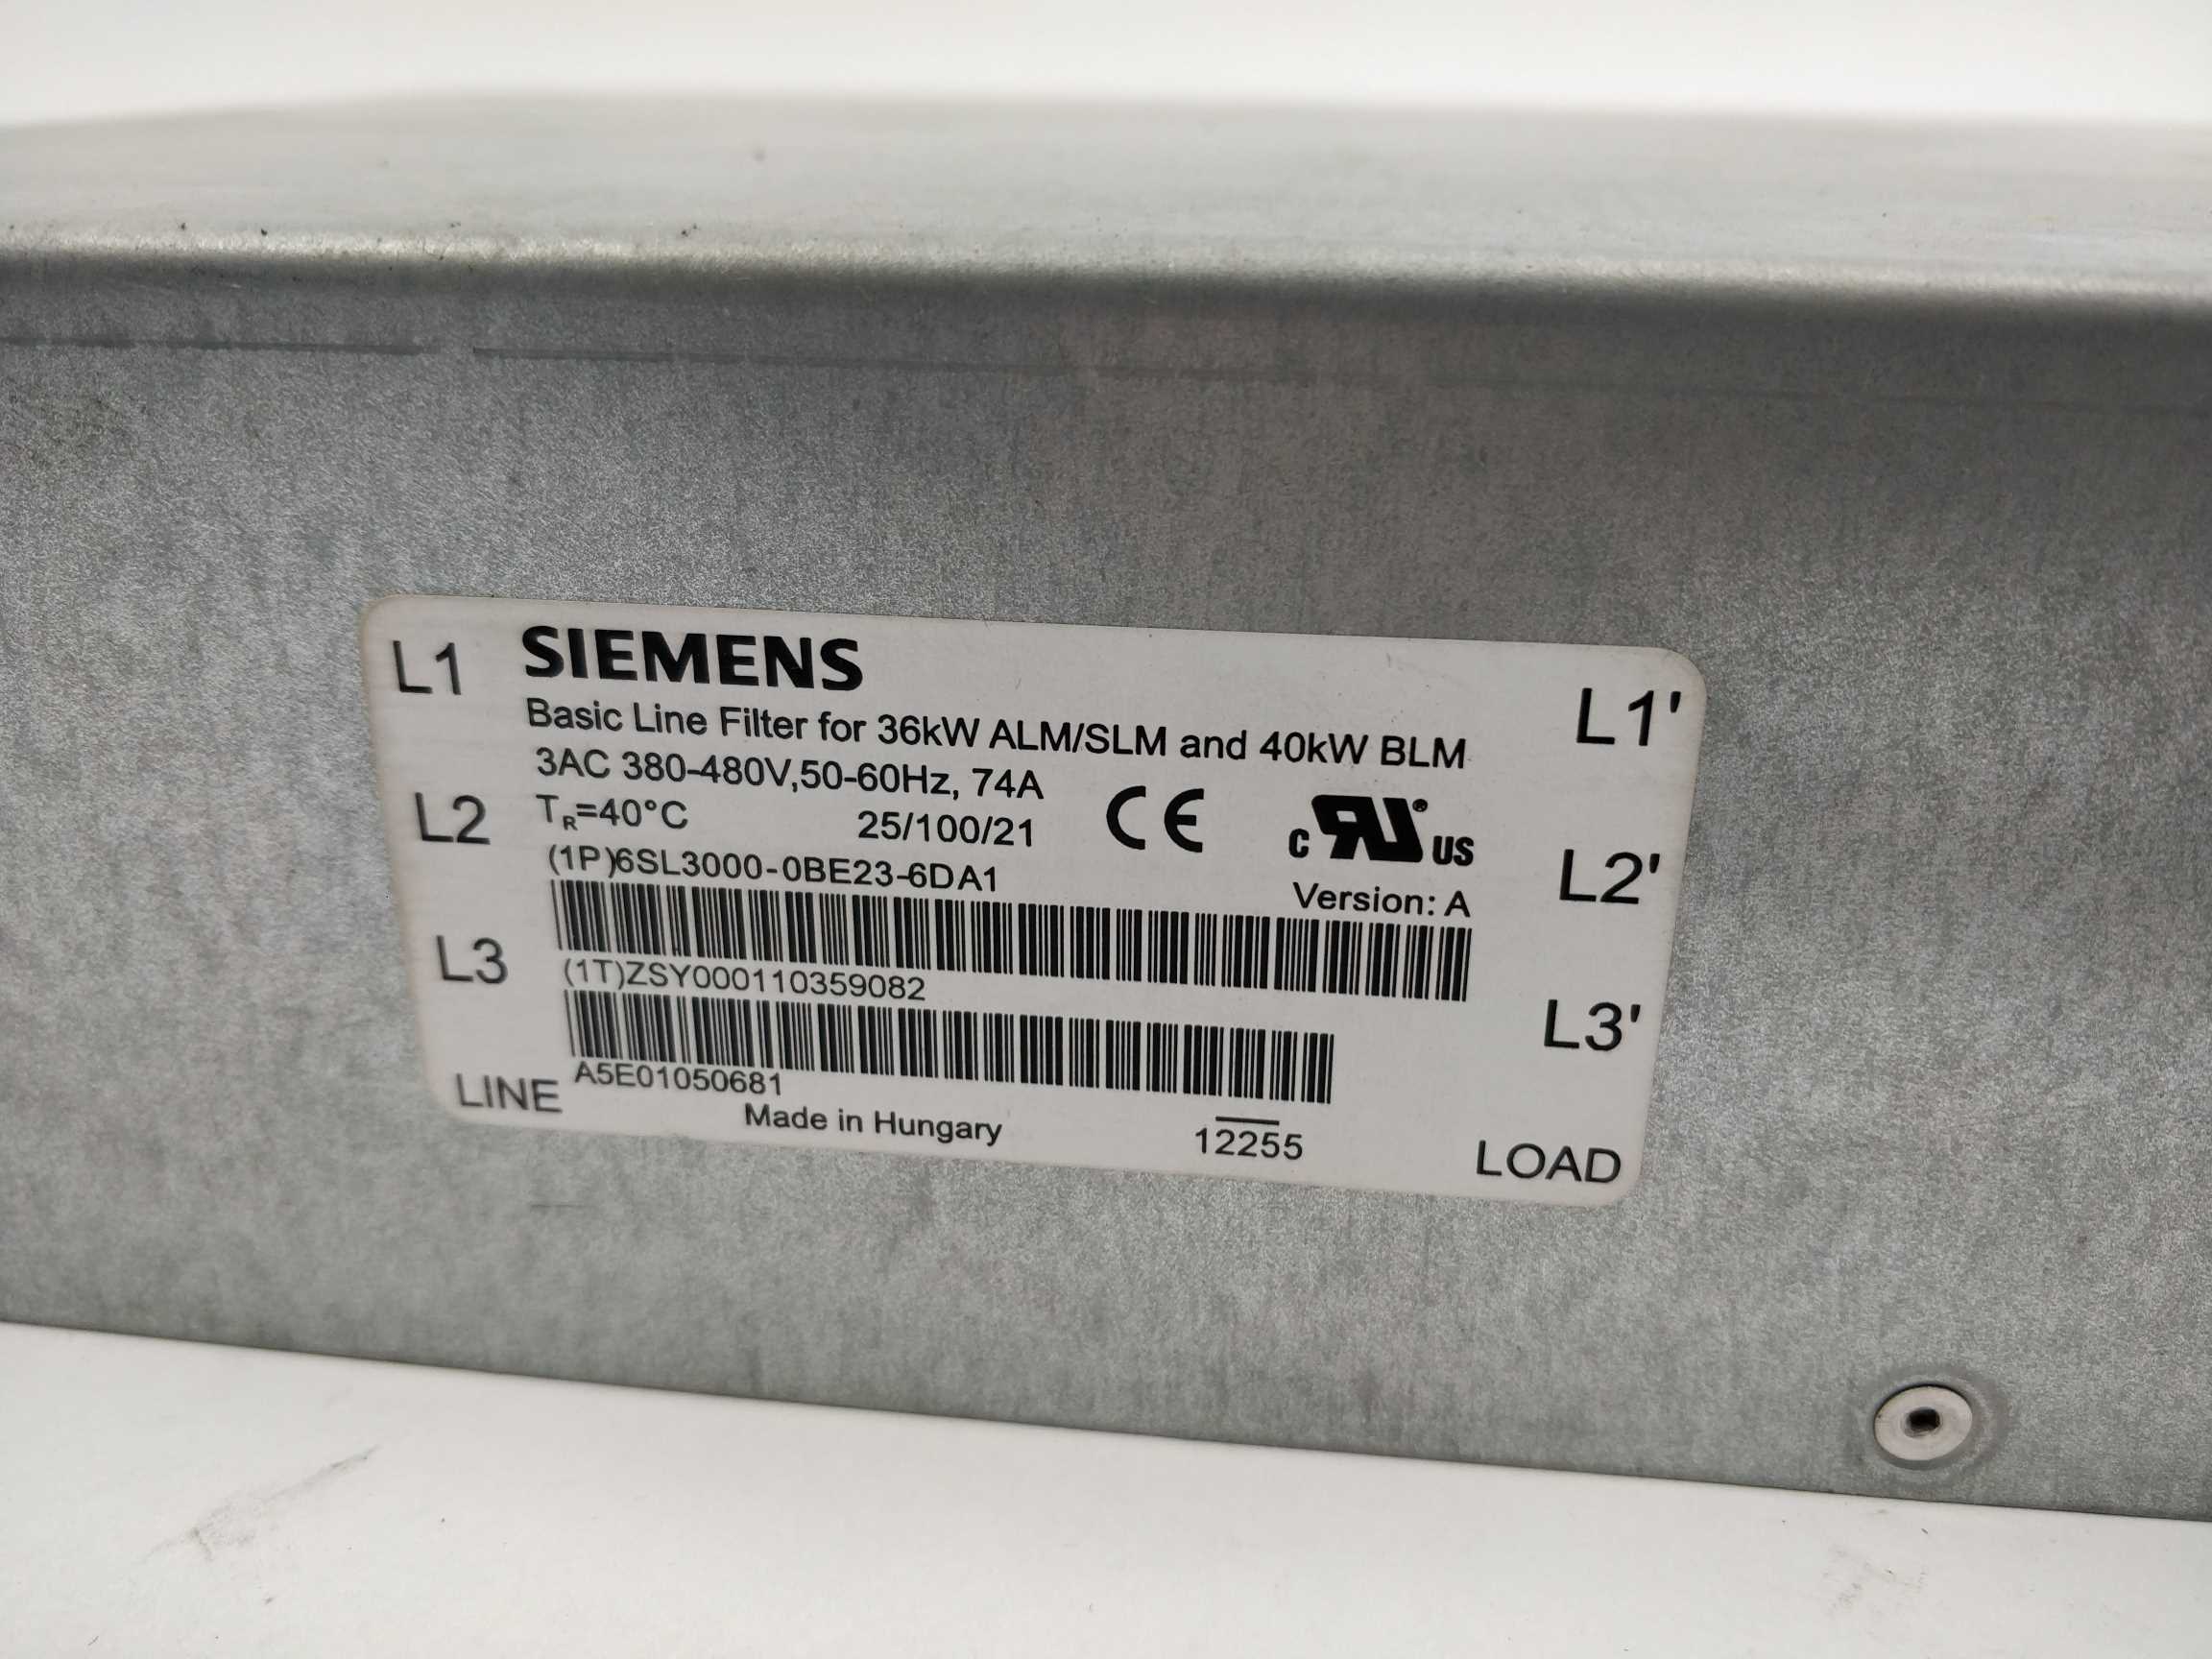 Siemens 6SL3000-0BE23-6DA1 Basic Line Filter 36kW ALM/SLM and 40kW